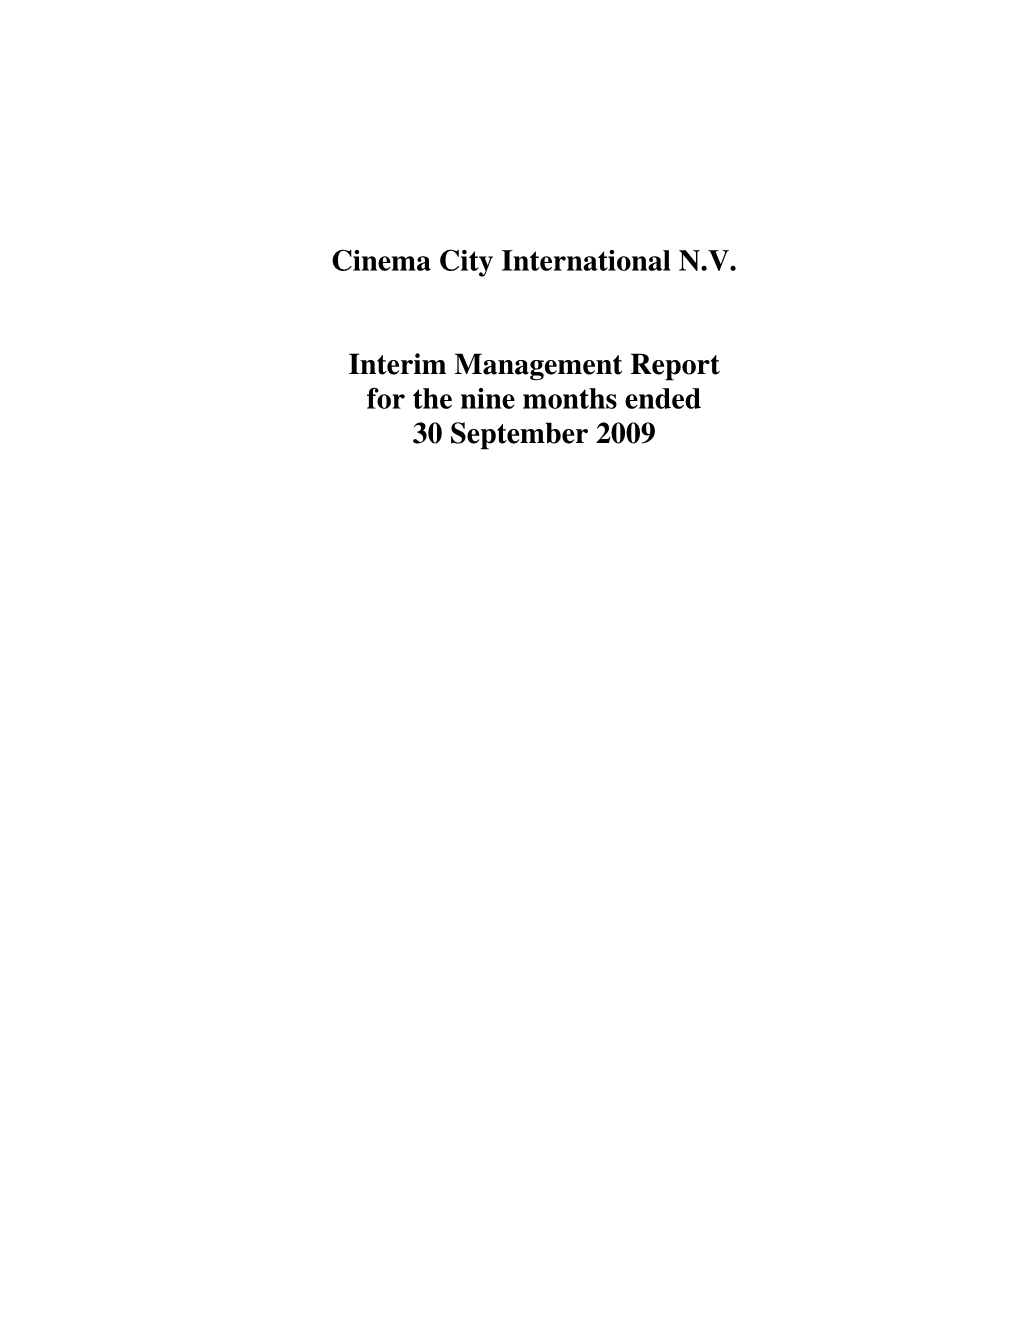 Cinema City International NV Interim Management